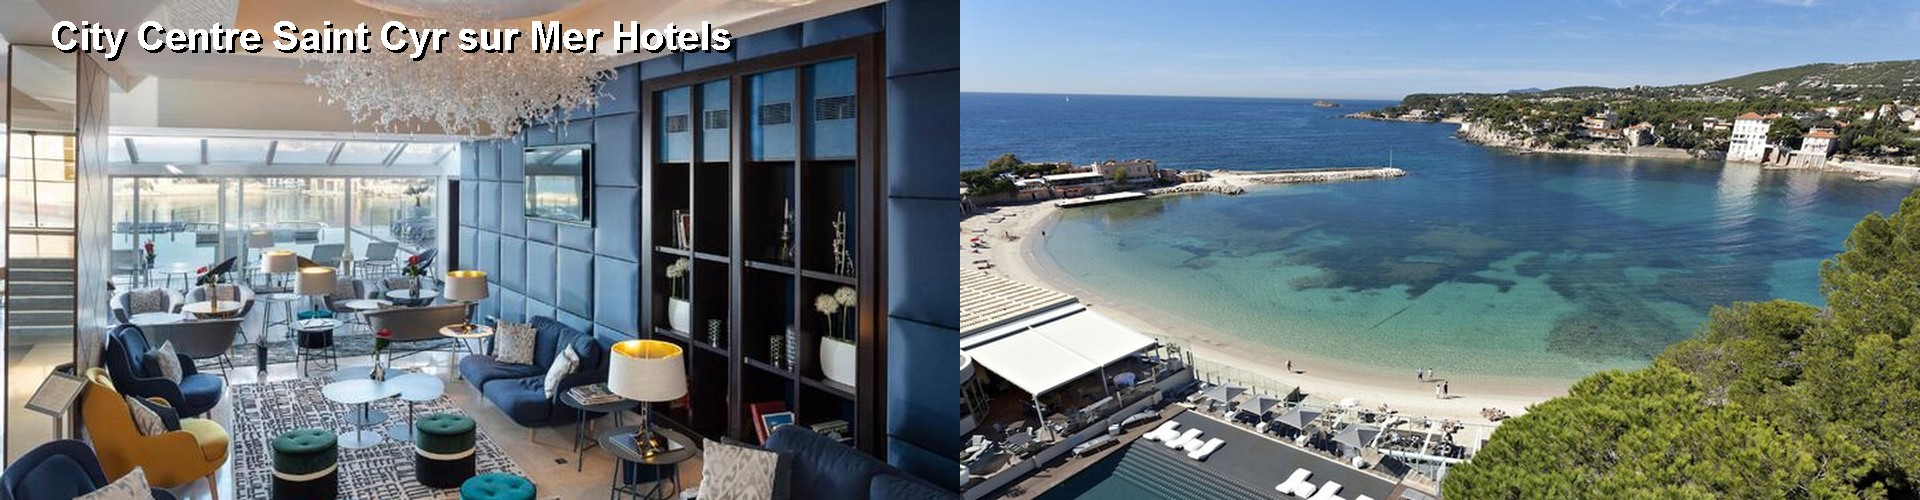 4 Best Hotels near City Centre Saint Cyr sur Mer